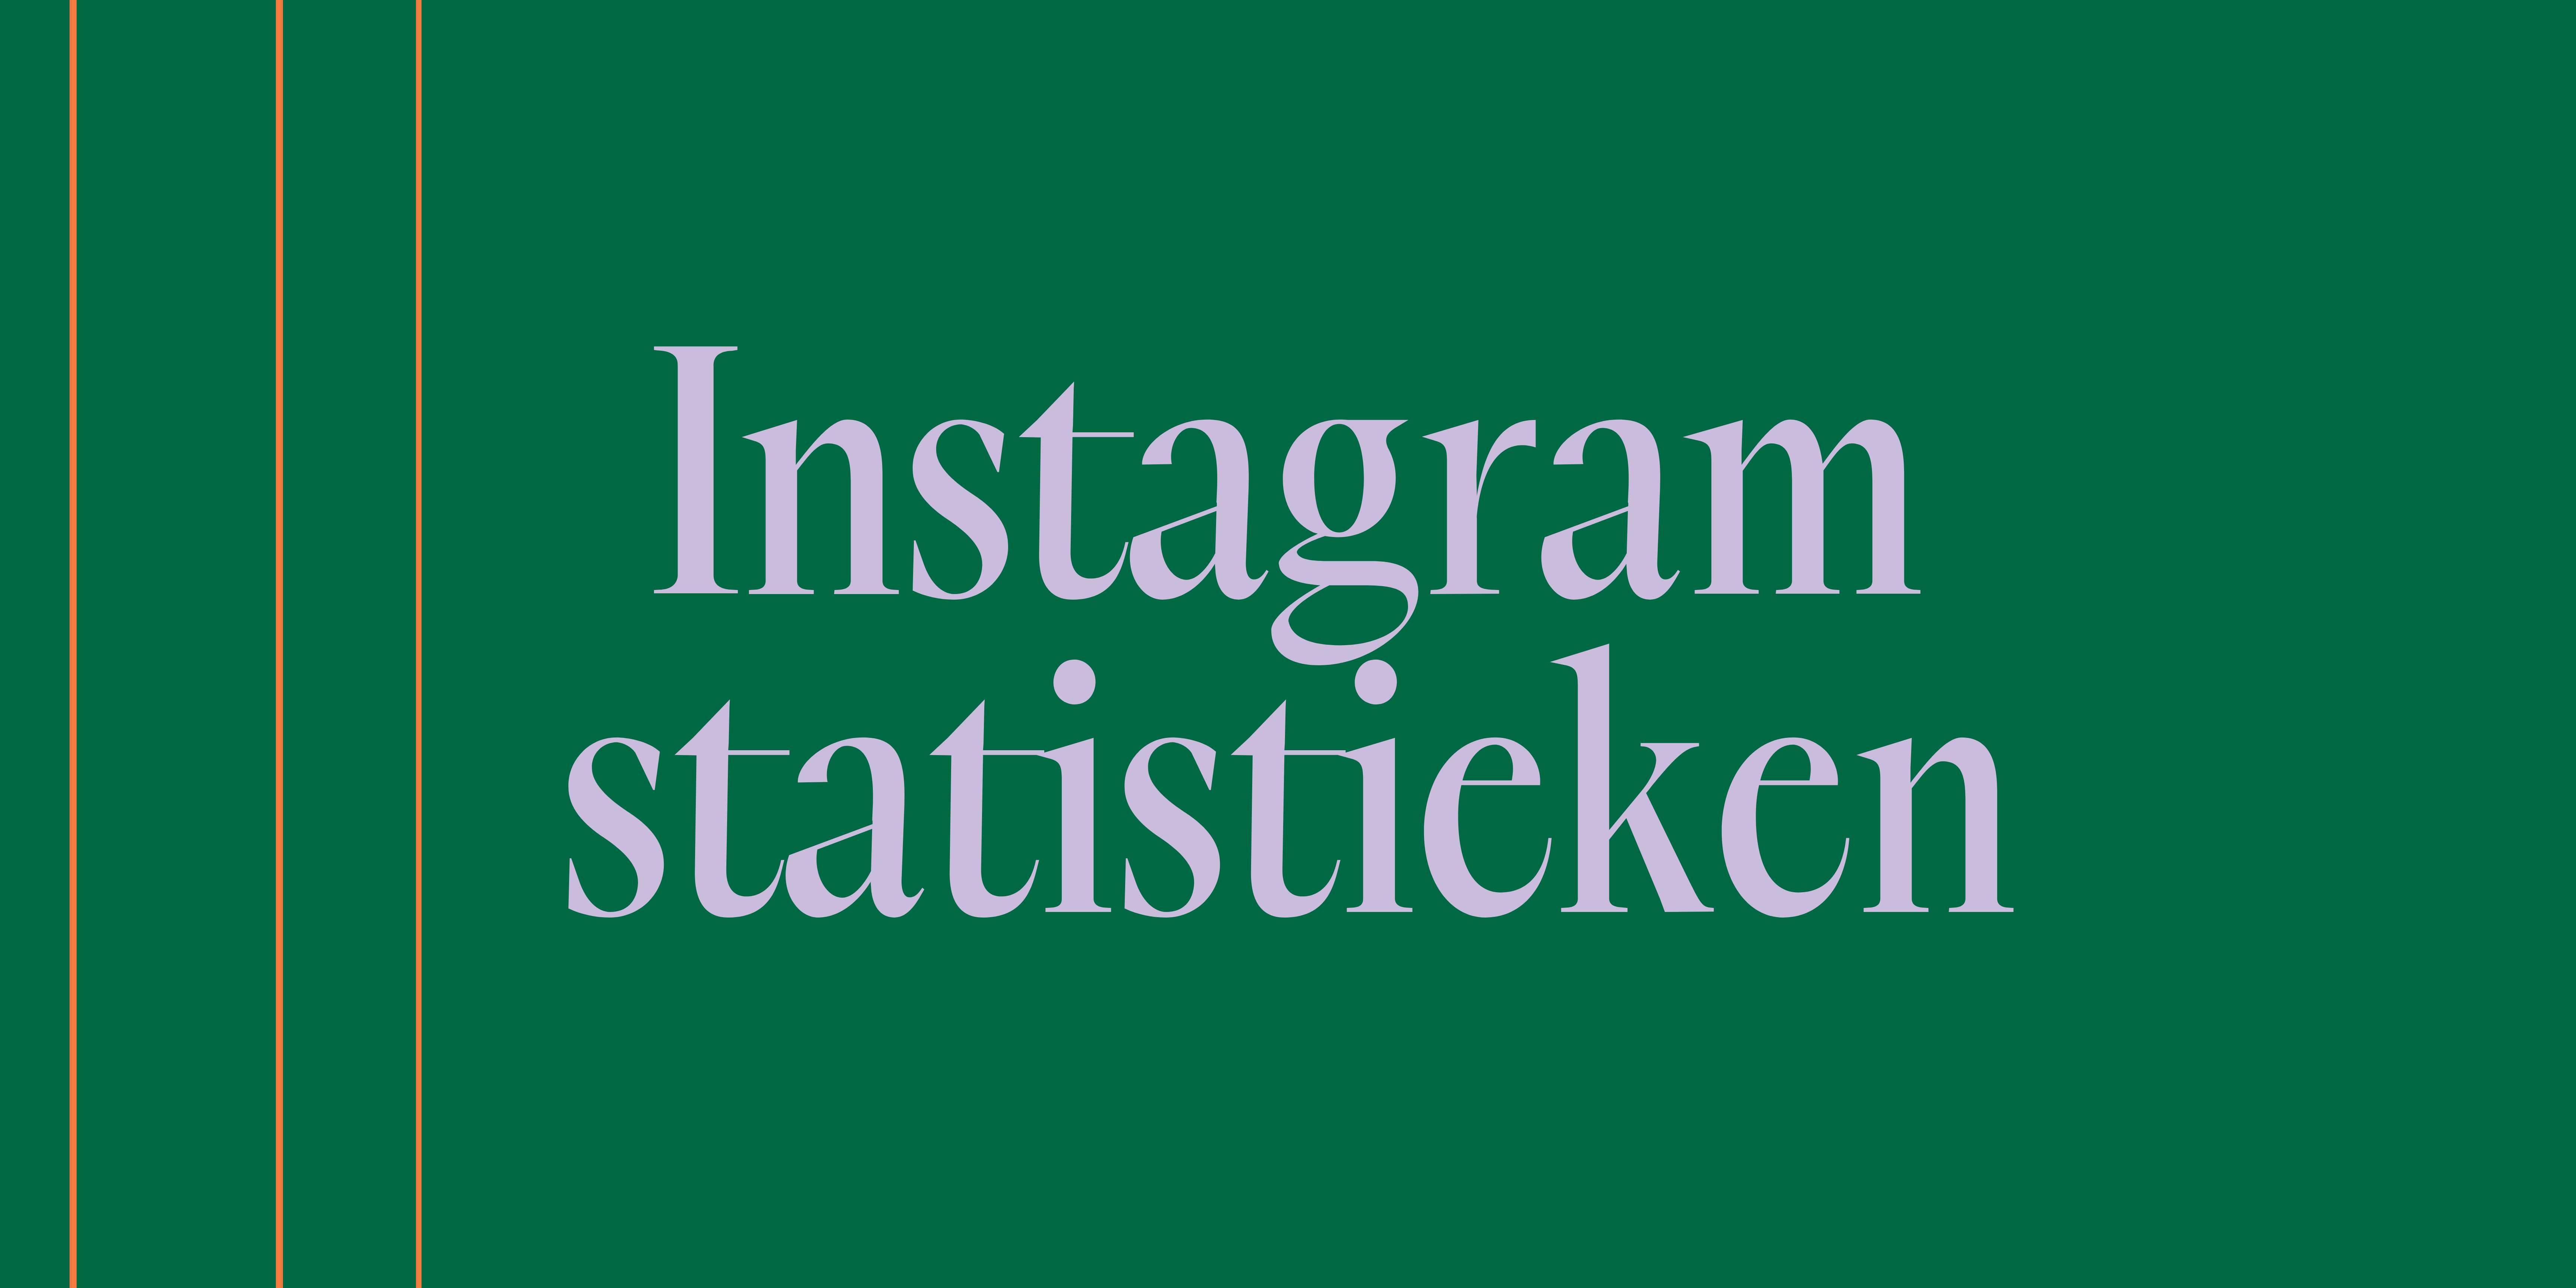 Instagram statistieken analyseren